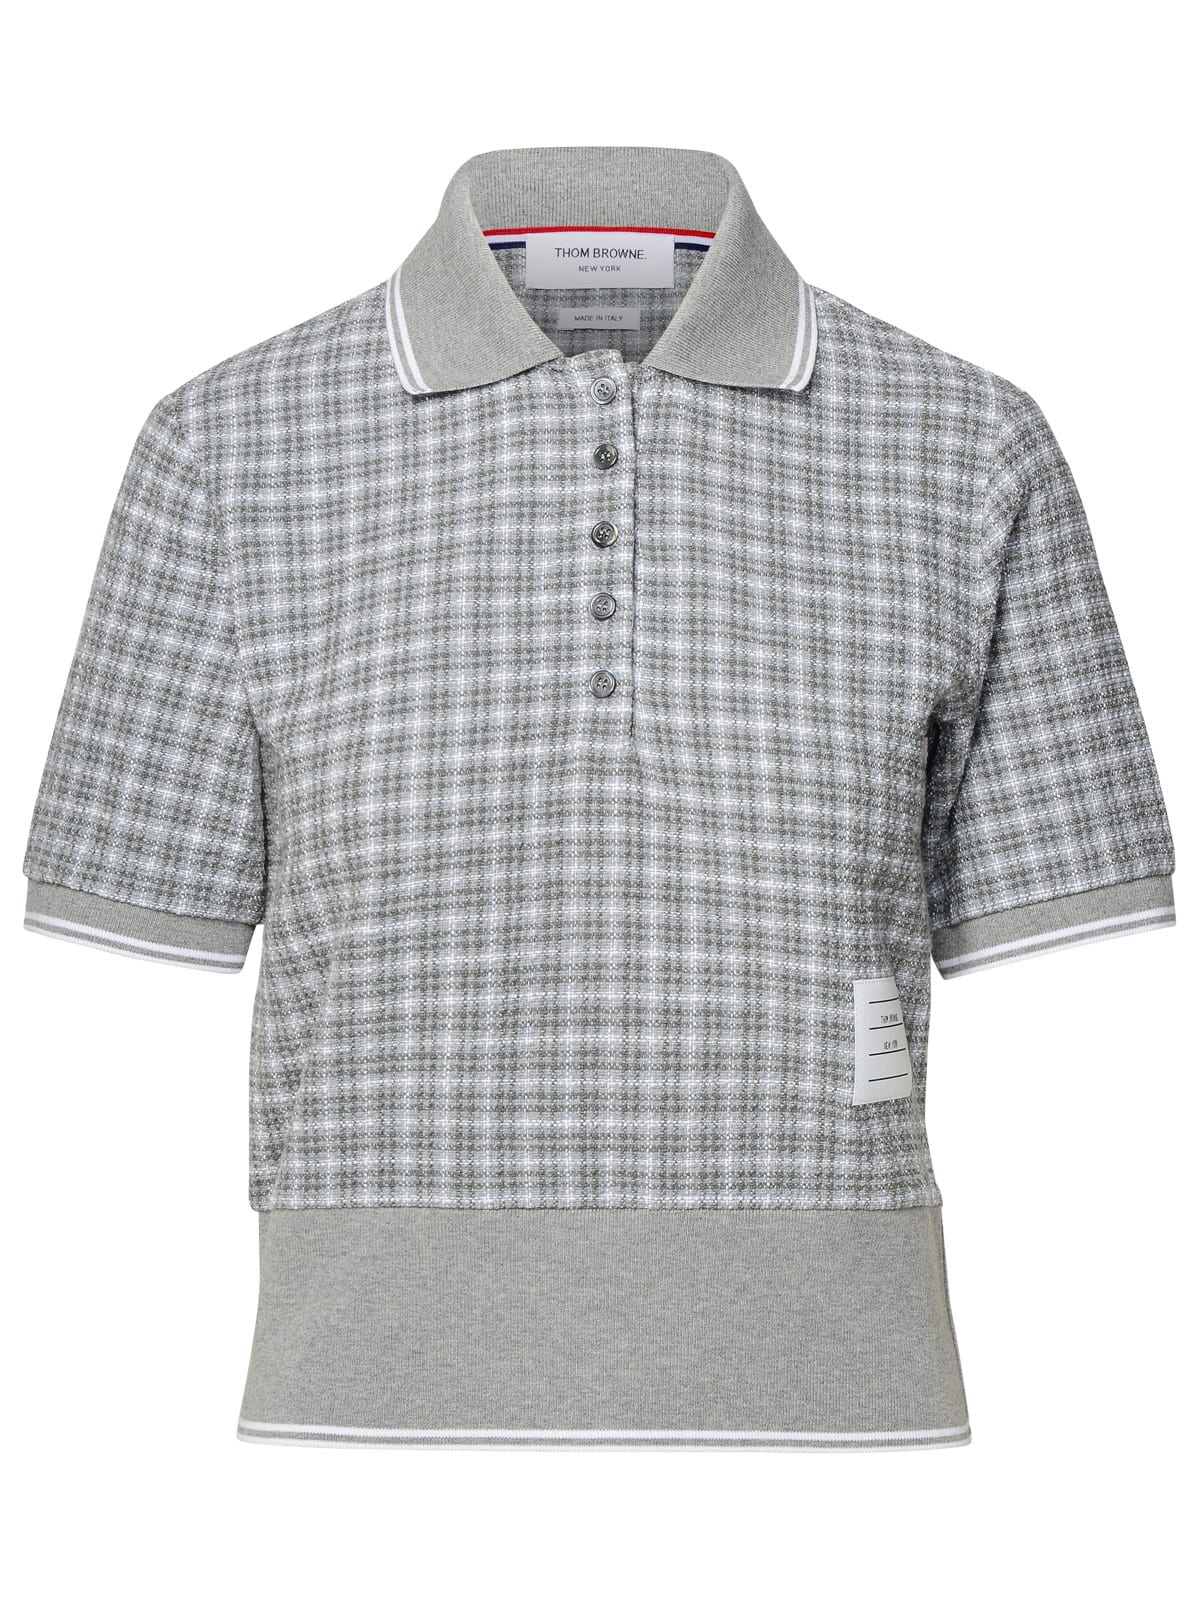 Grey Cotton Blend Polo Shirt